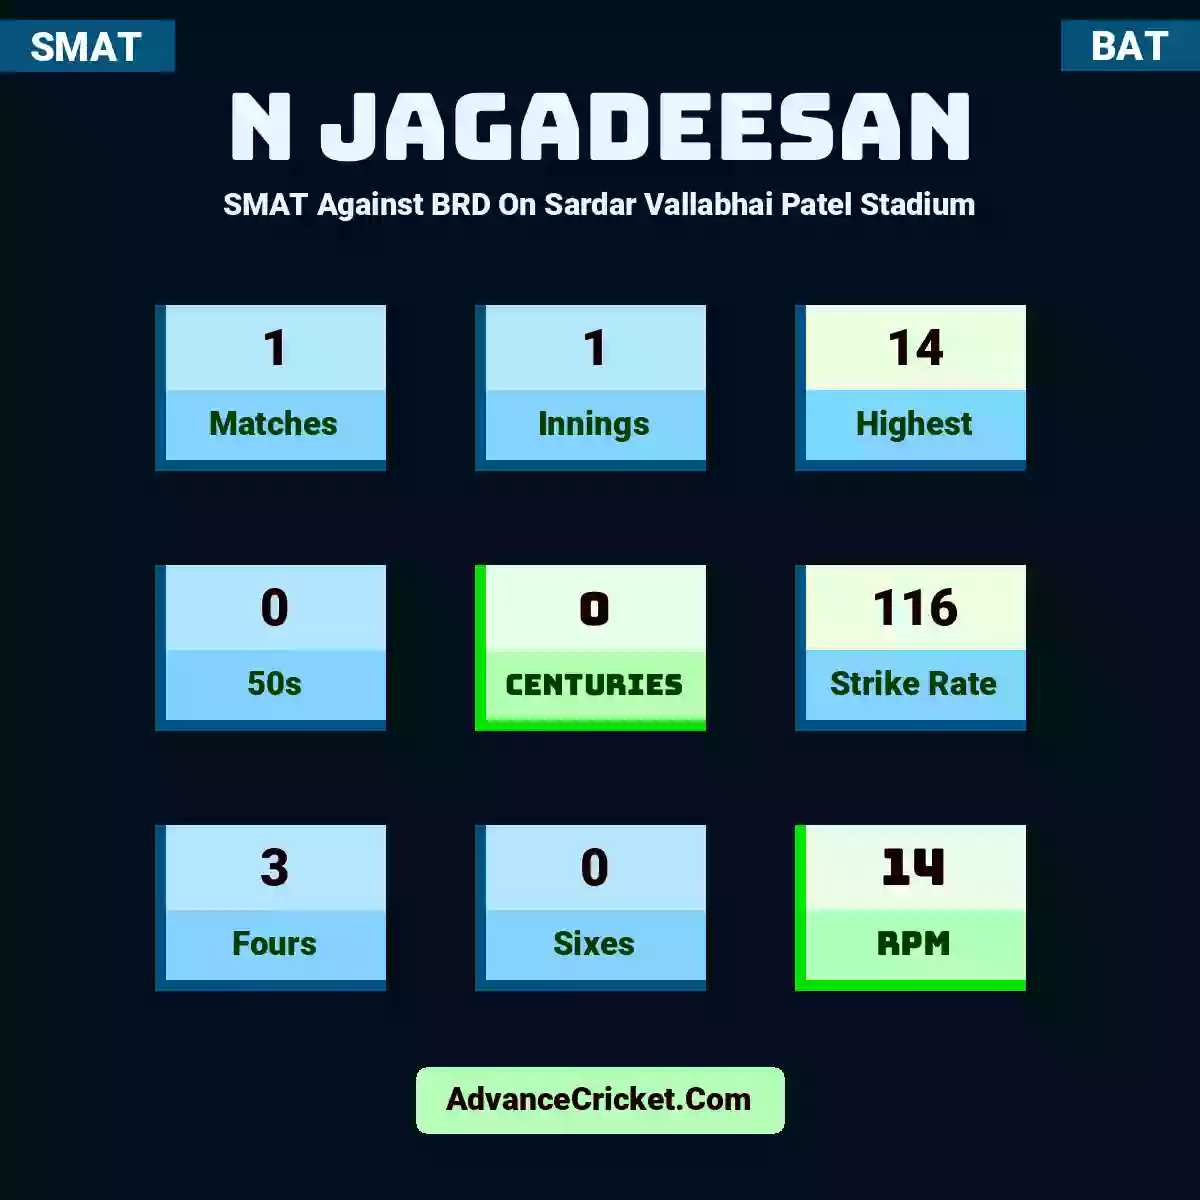 N Jagadeesan SMAT  Against BRD On Sardar Vallabhai Patel Stadium, N Jagadeesan played 1 matches, scored 14 runs as highest, 0 half-centuries, and 0 centuries, with a strike rate of 116. N.Jagadeesan hit 3 fours and 0 sixes, with an RPM of 14.